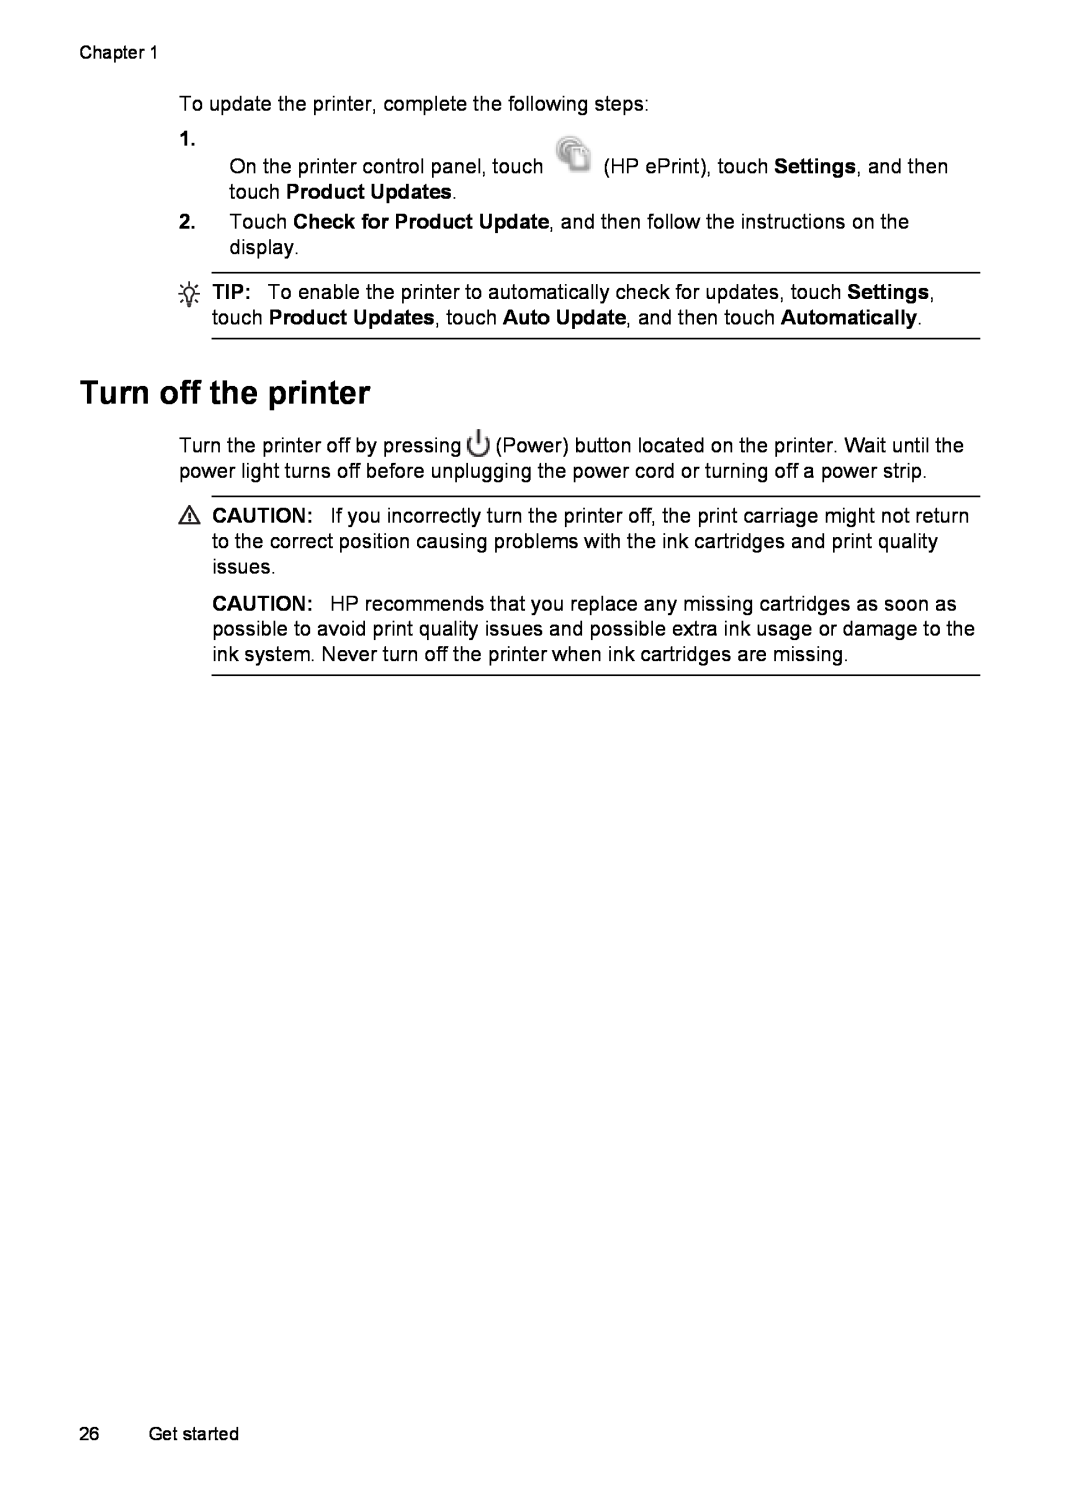 HP 6600 - H7 manual Turn off the printer 